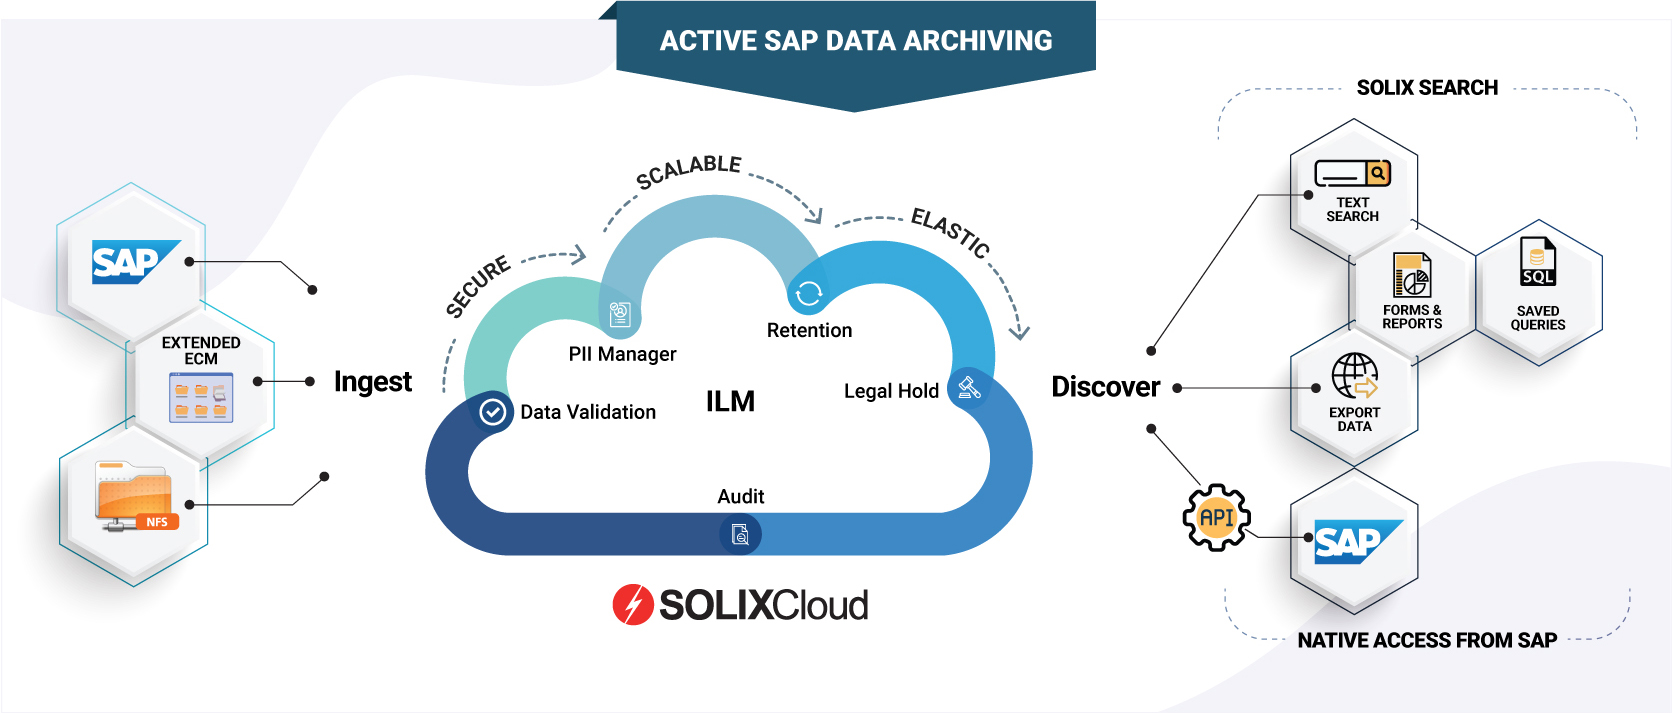 Active SAP Data Archiving